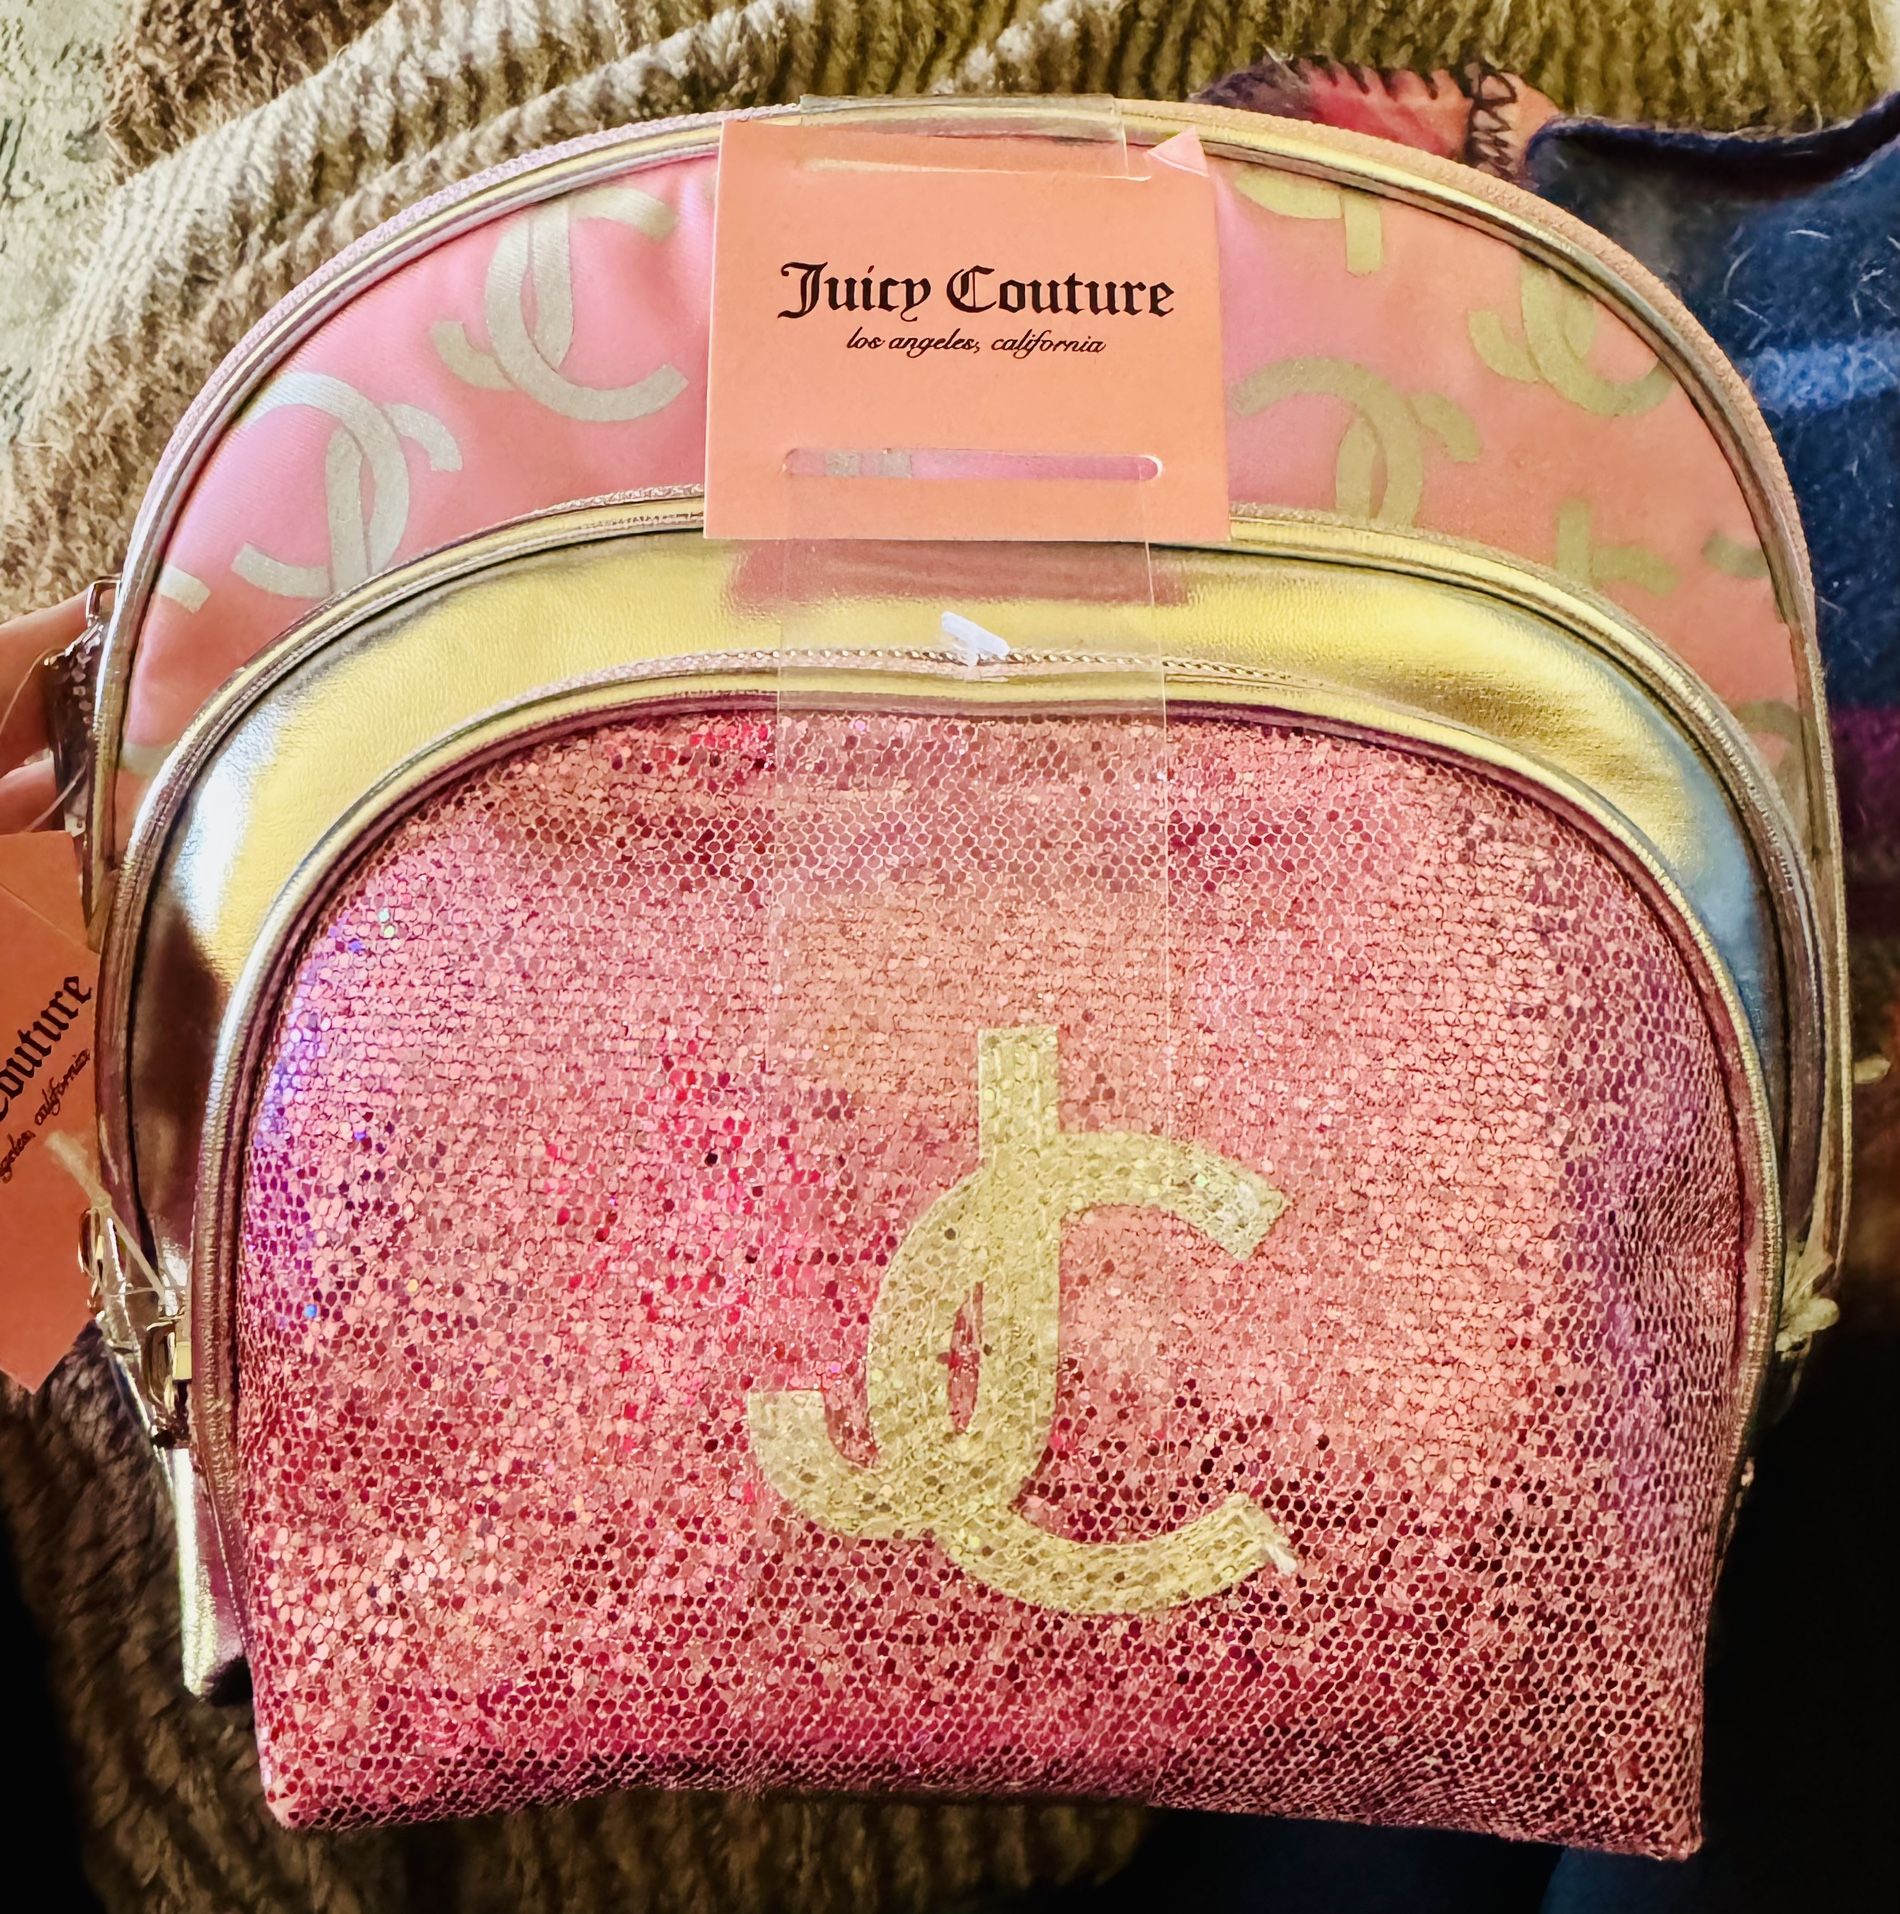 Juicy Couture Makeup Bags